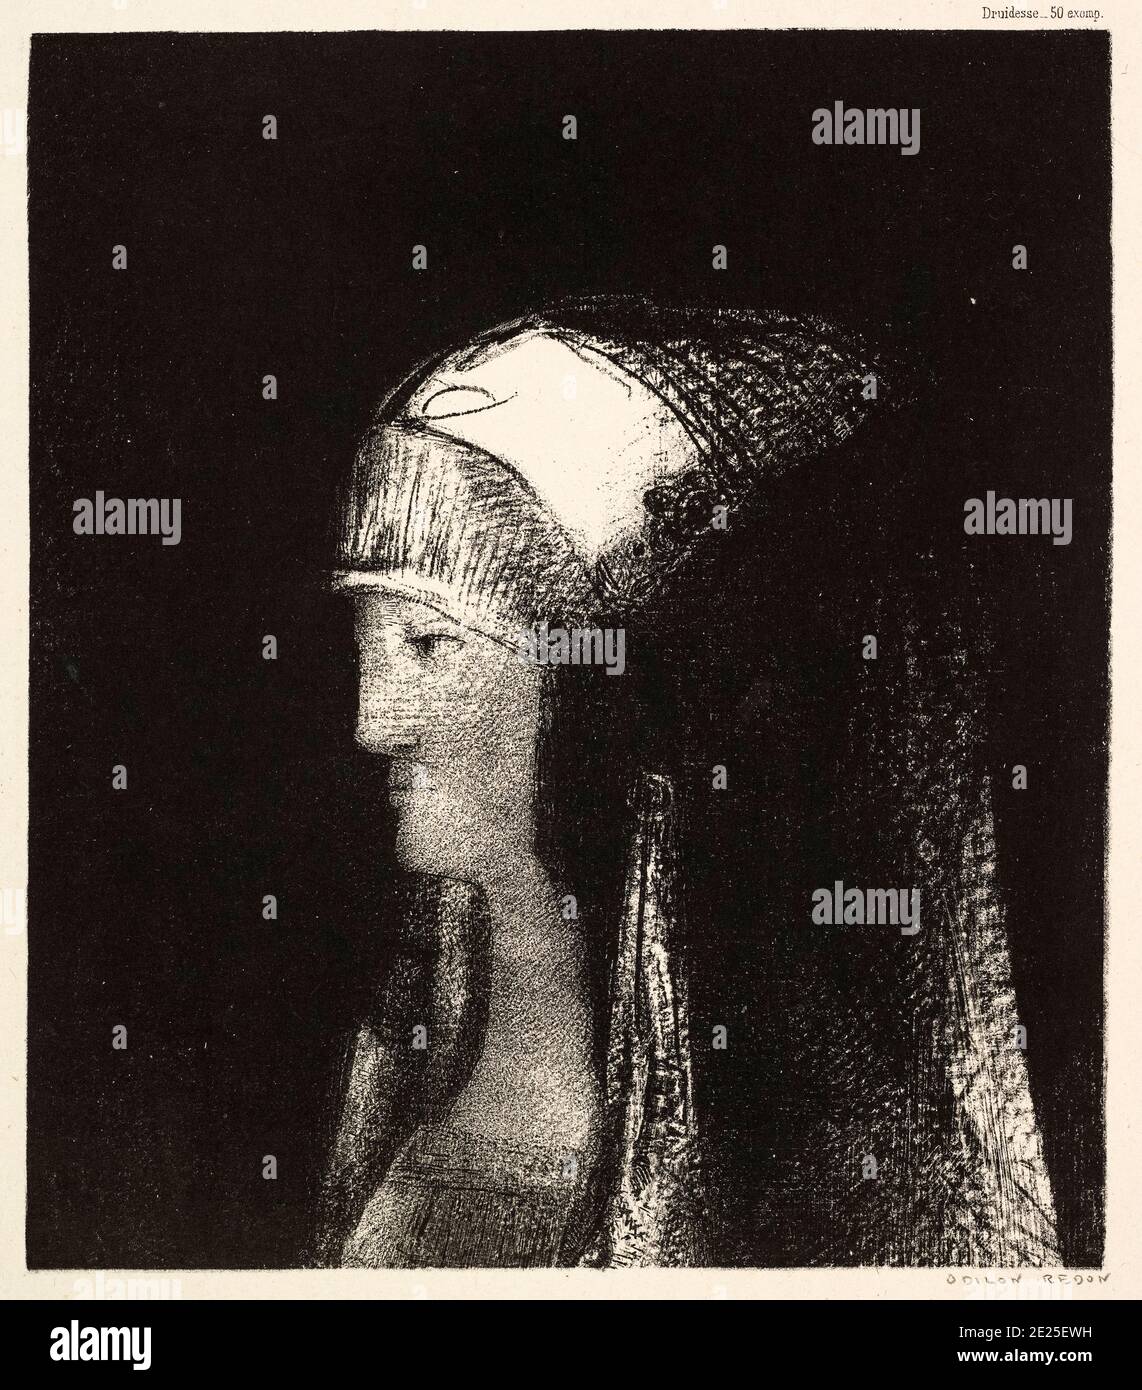 Odilon Redon, Druidesse, Lithographie, 1891 Stockfoto